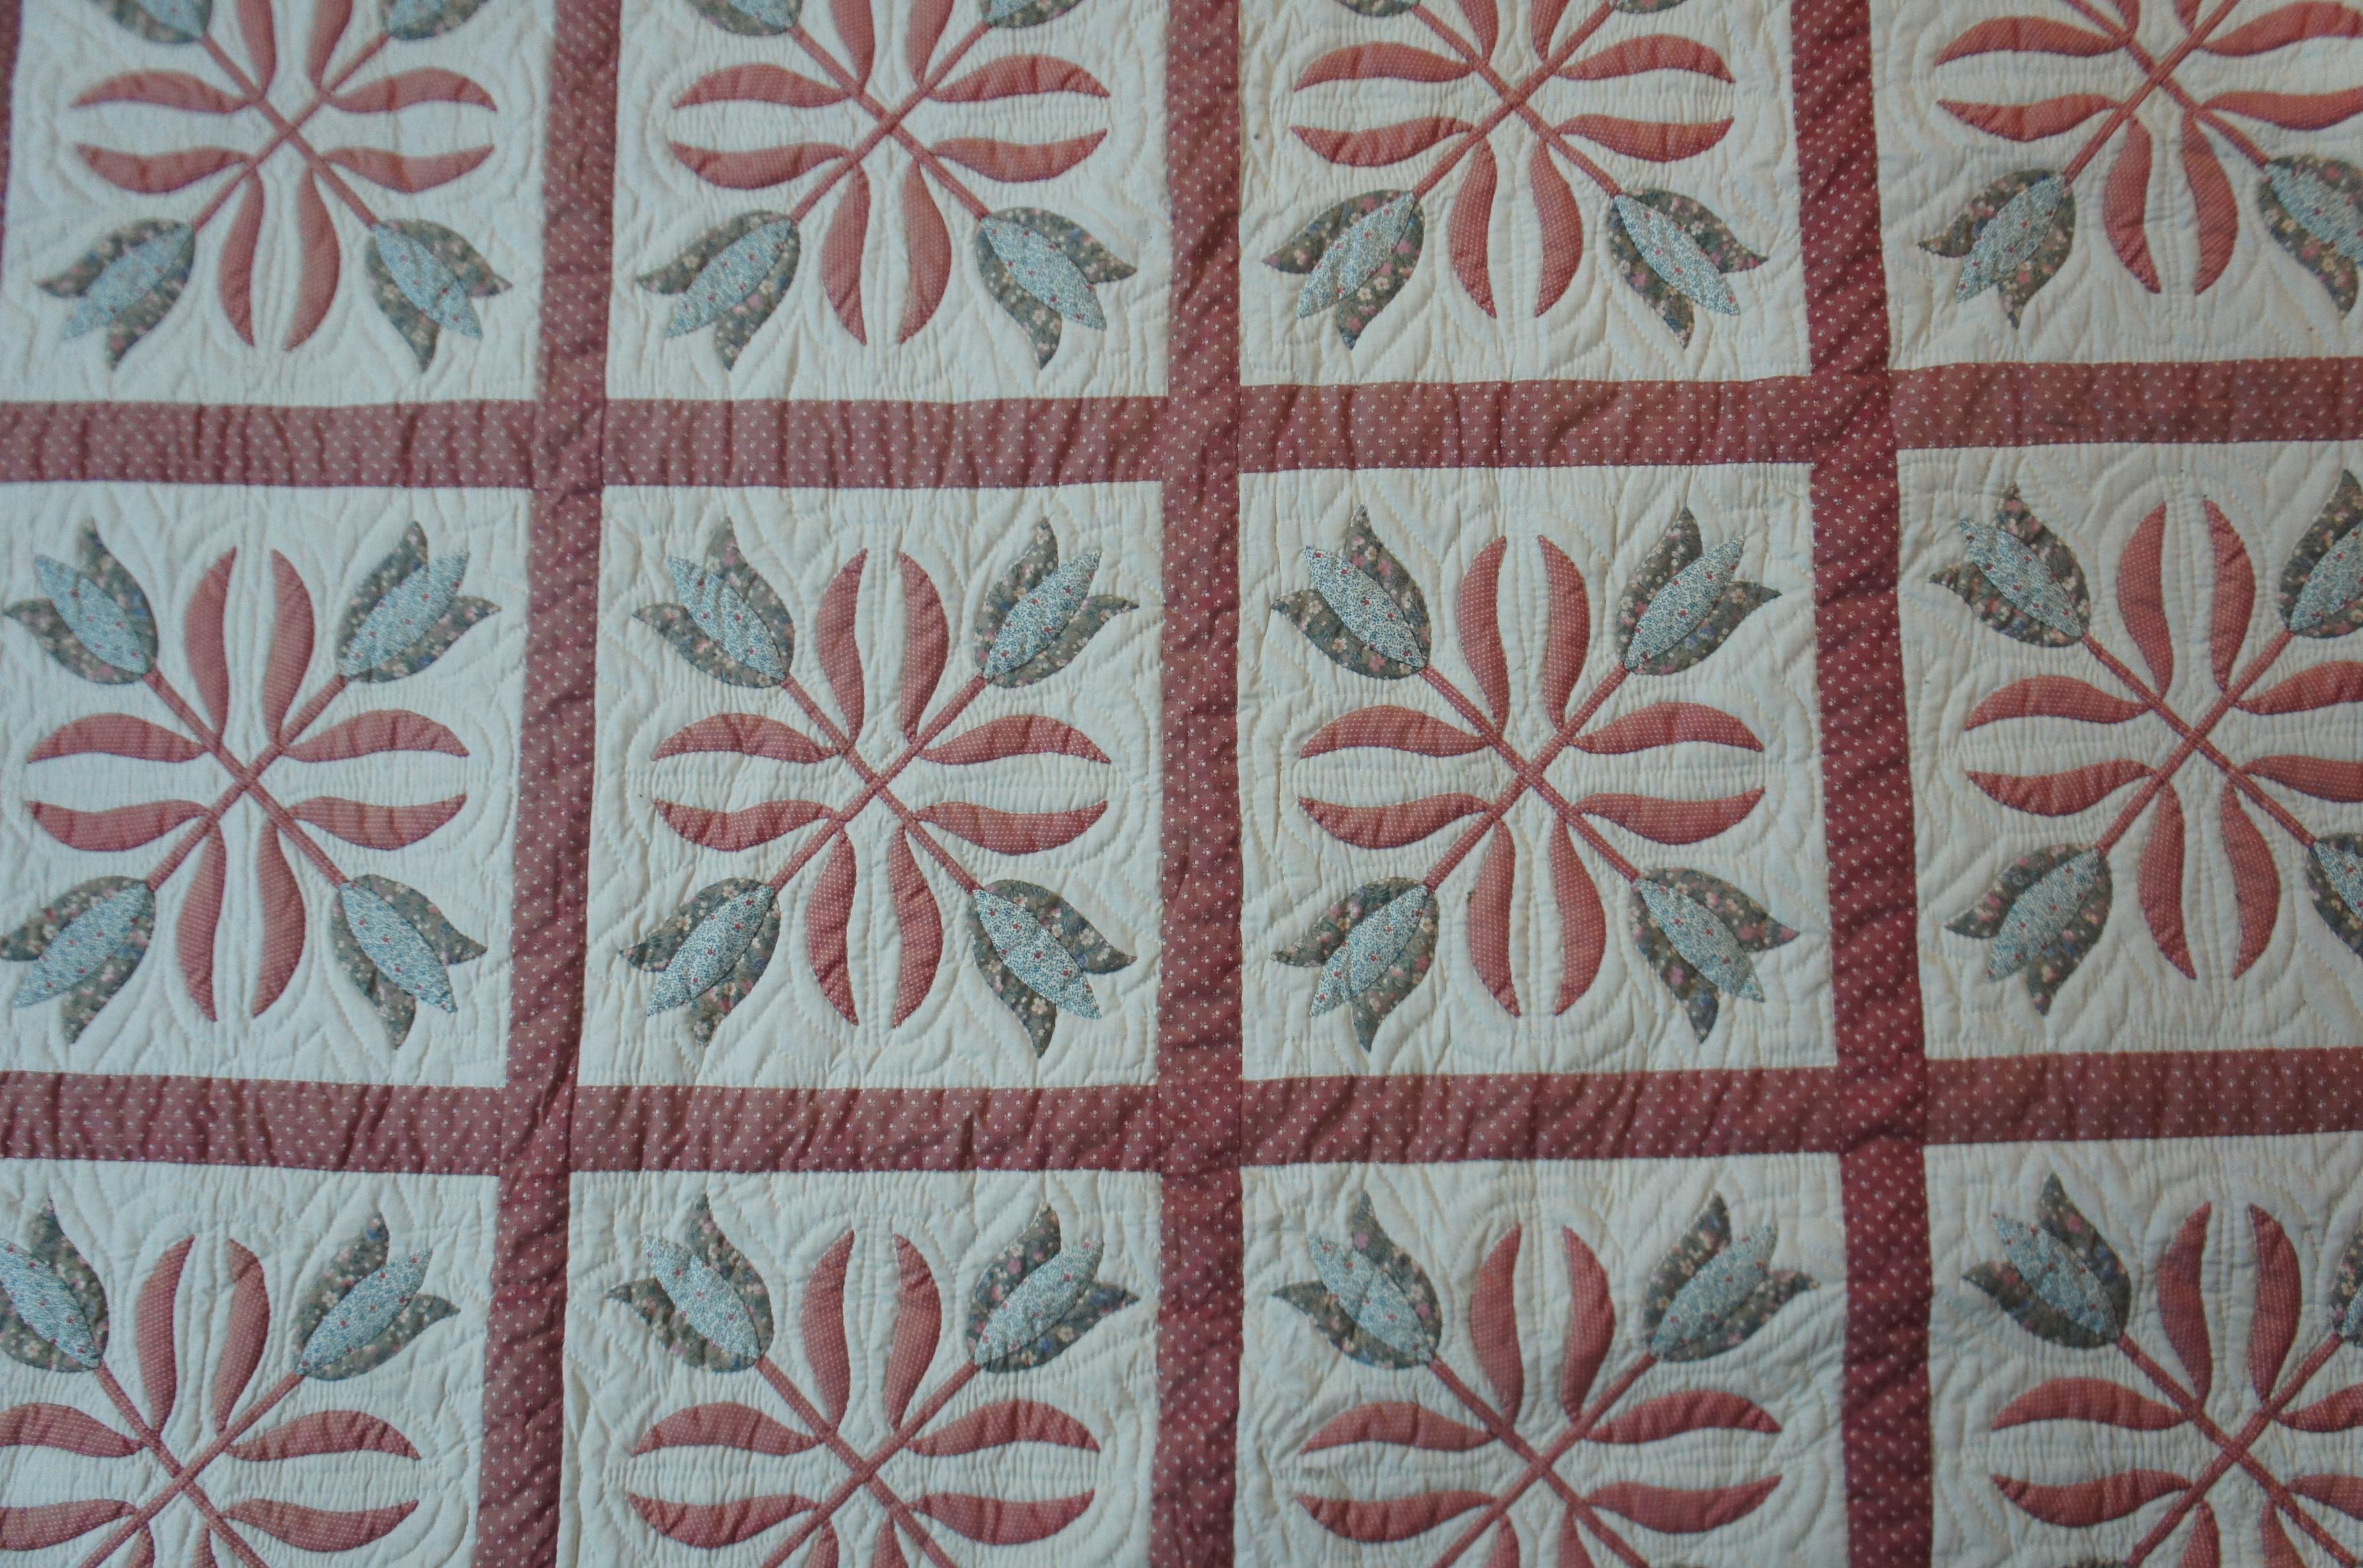 Cotton Vtg Hand Stitched Quilt Geometric Folk Art Tulips King Queen Blanket Bedspread For Sale